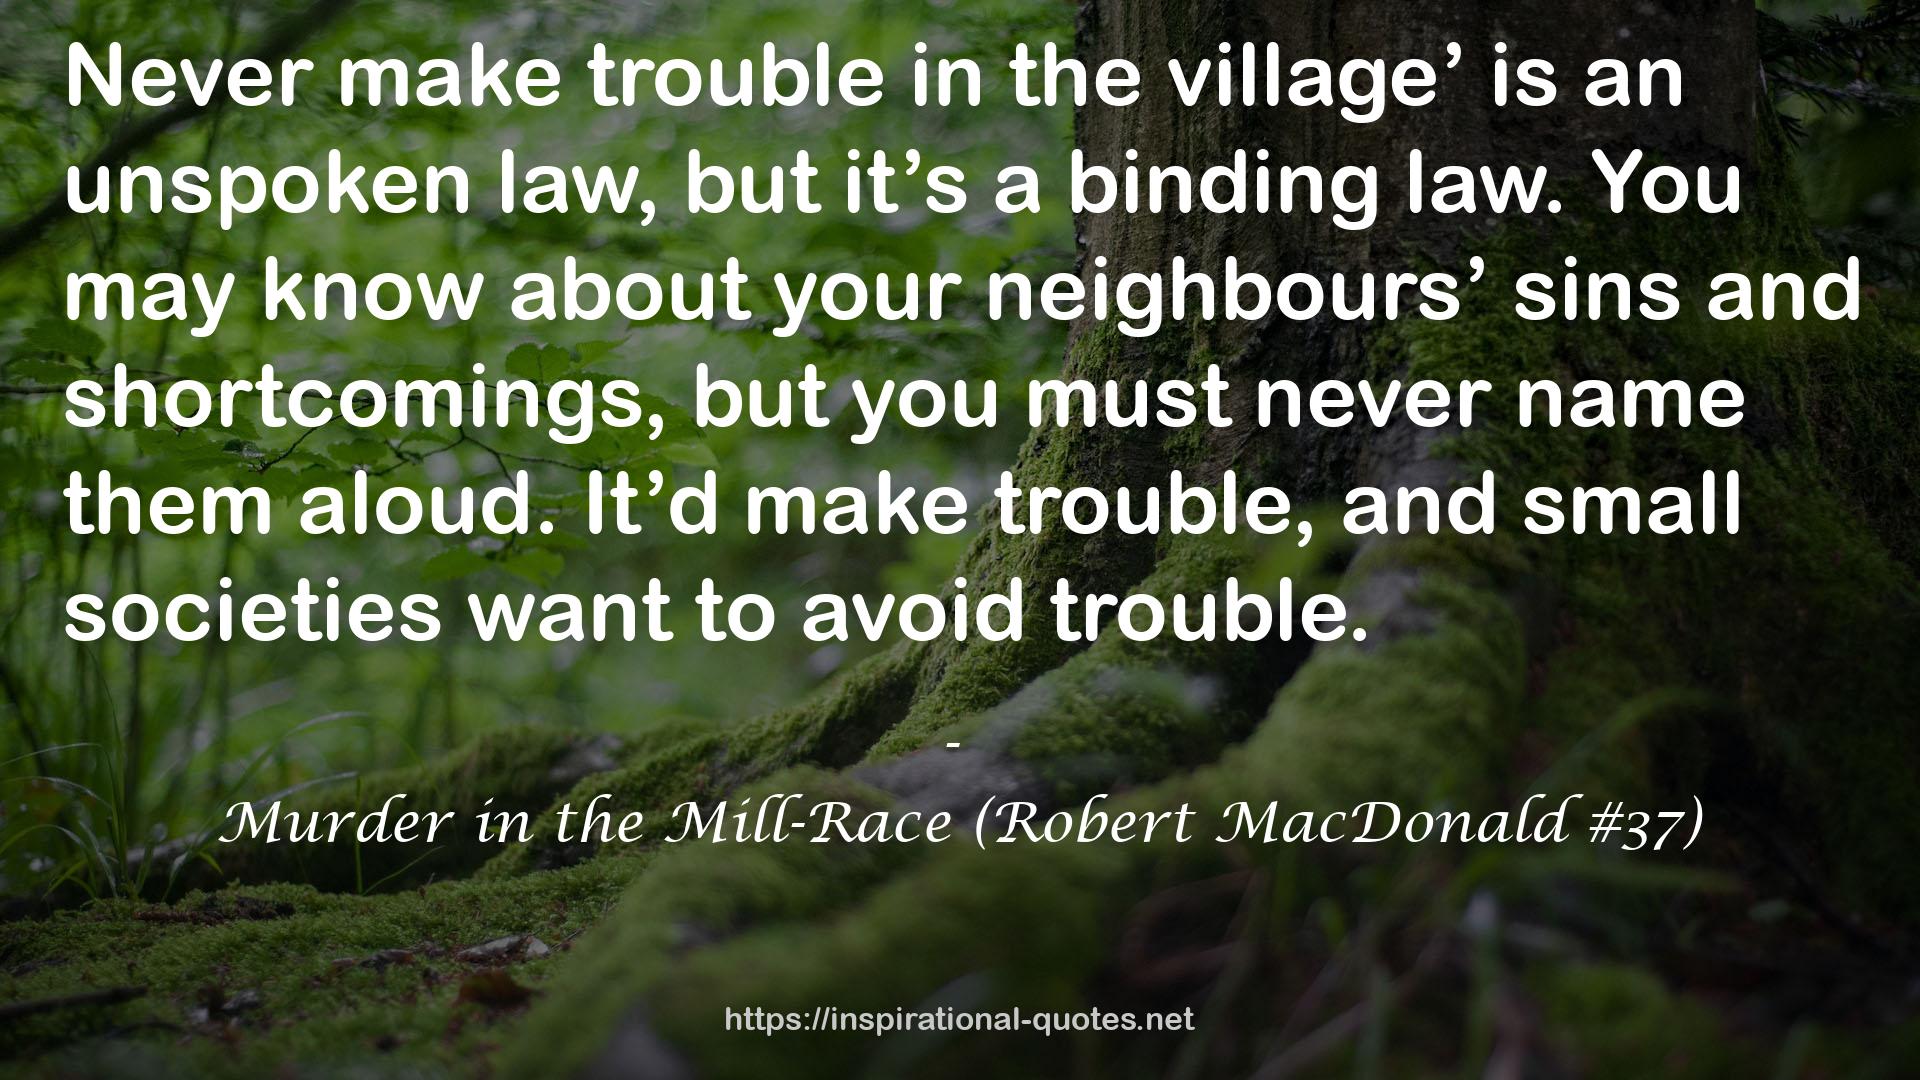 Murder in the Mill-Race (Robert MacDonald #37) QUOTES